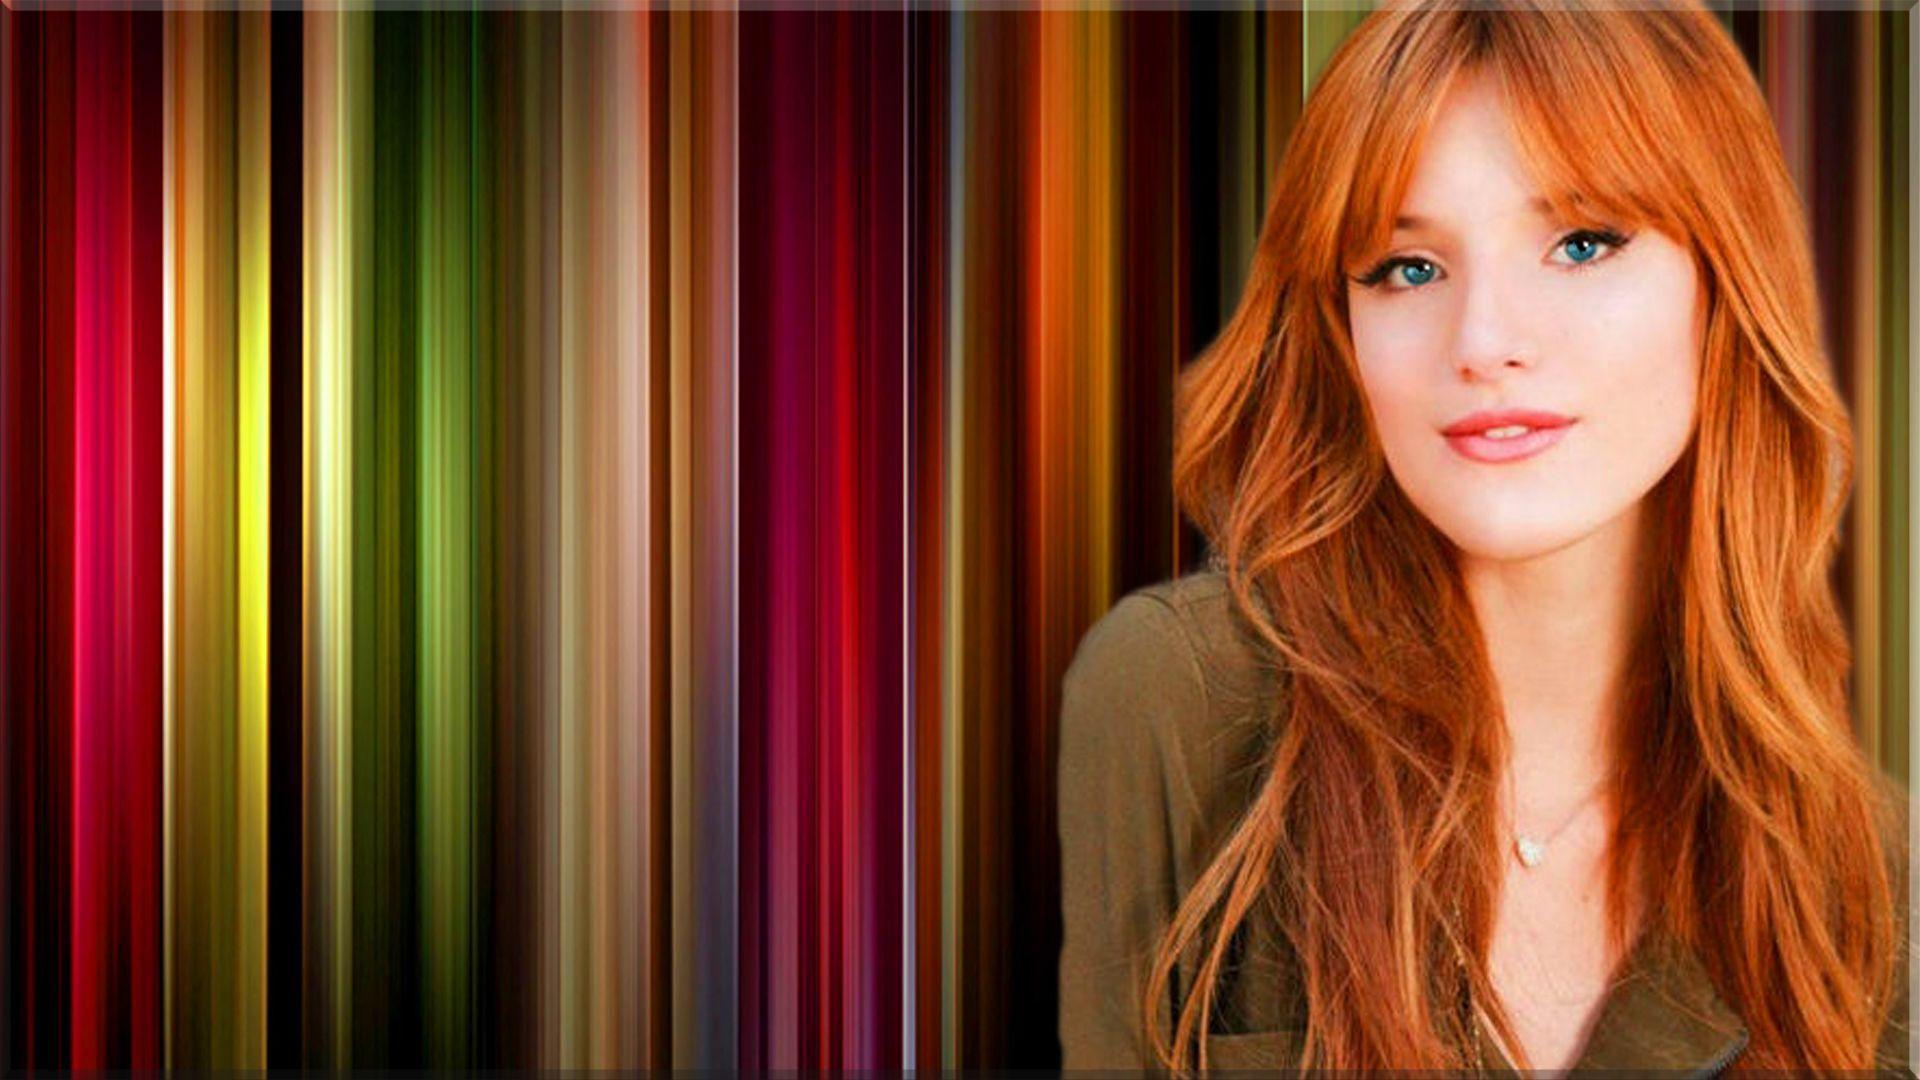 Bella Thorne HD Wallpaper